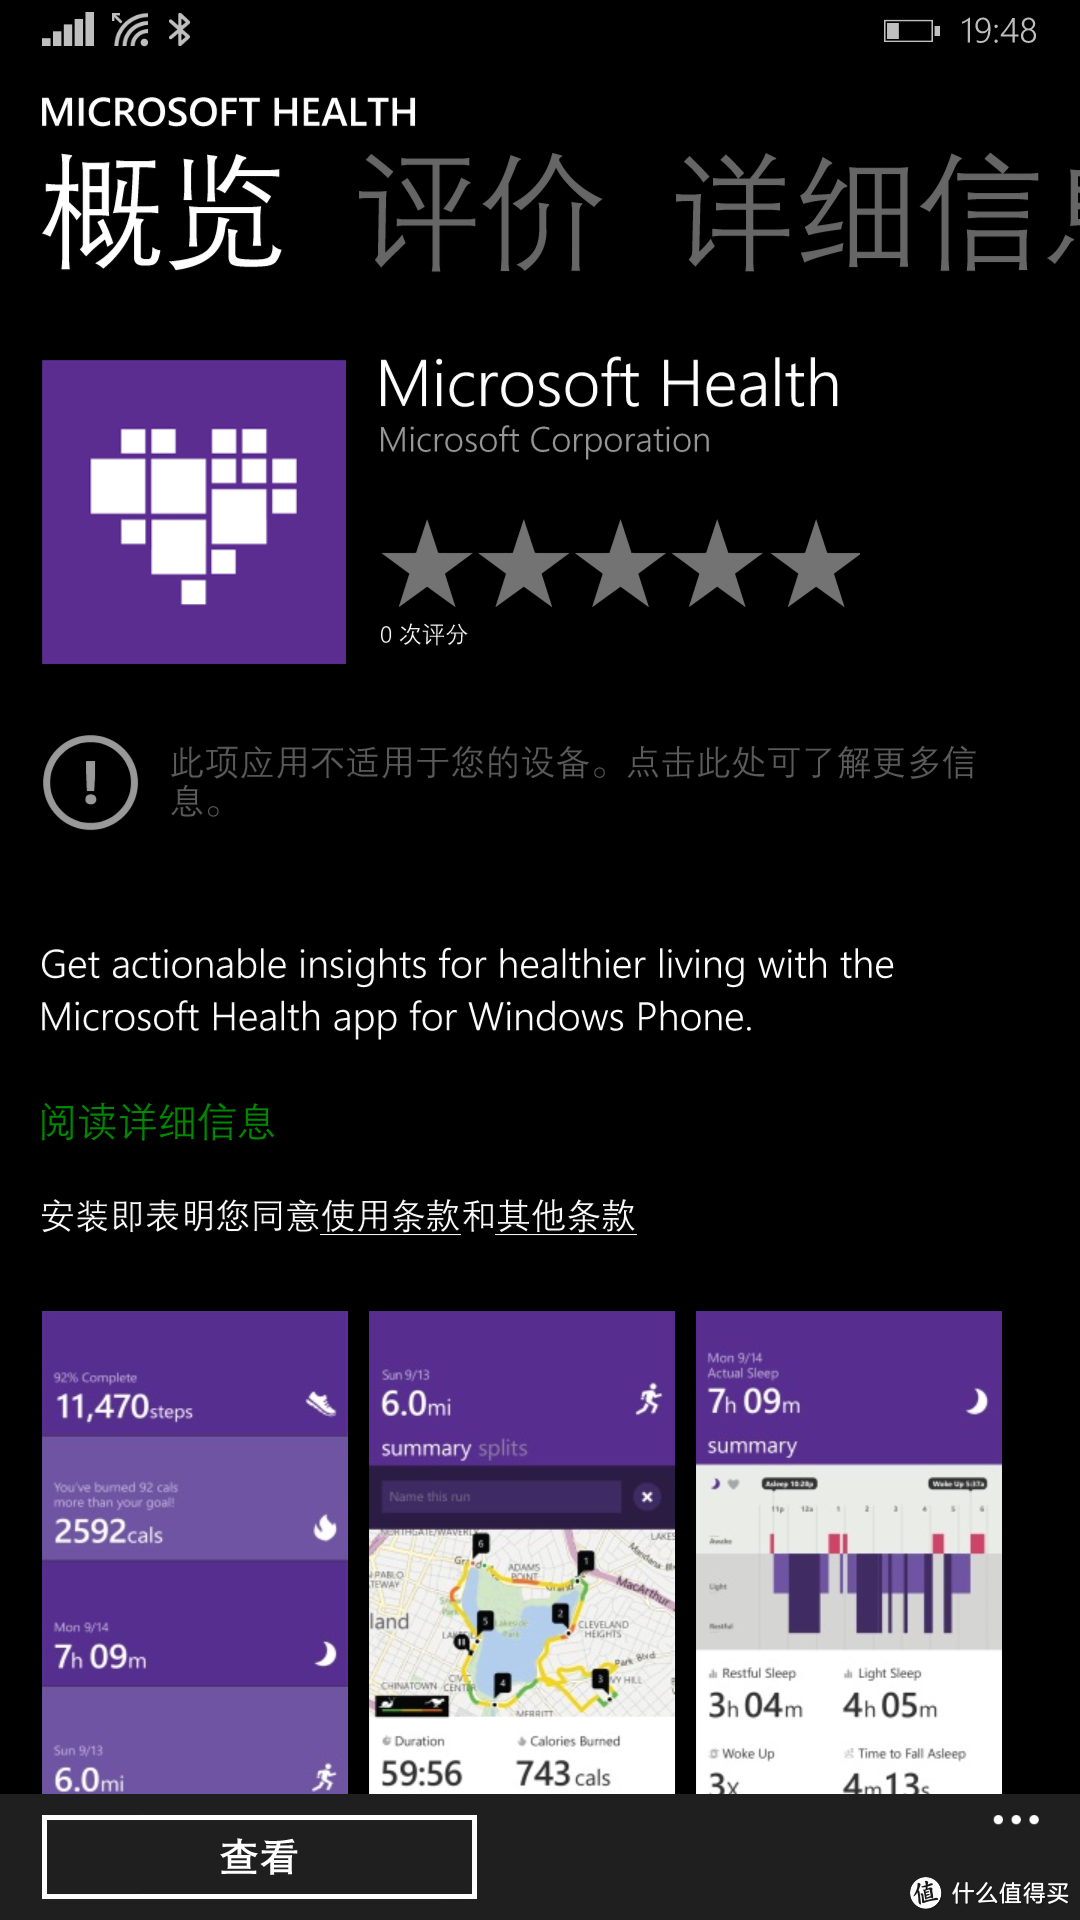 Microsoft Health in store